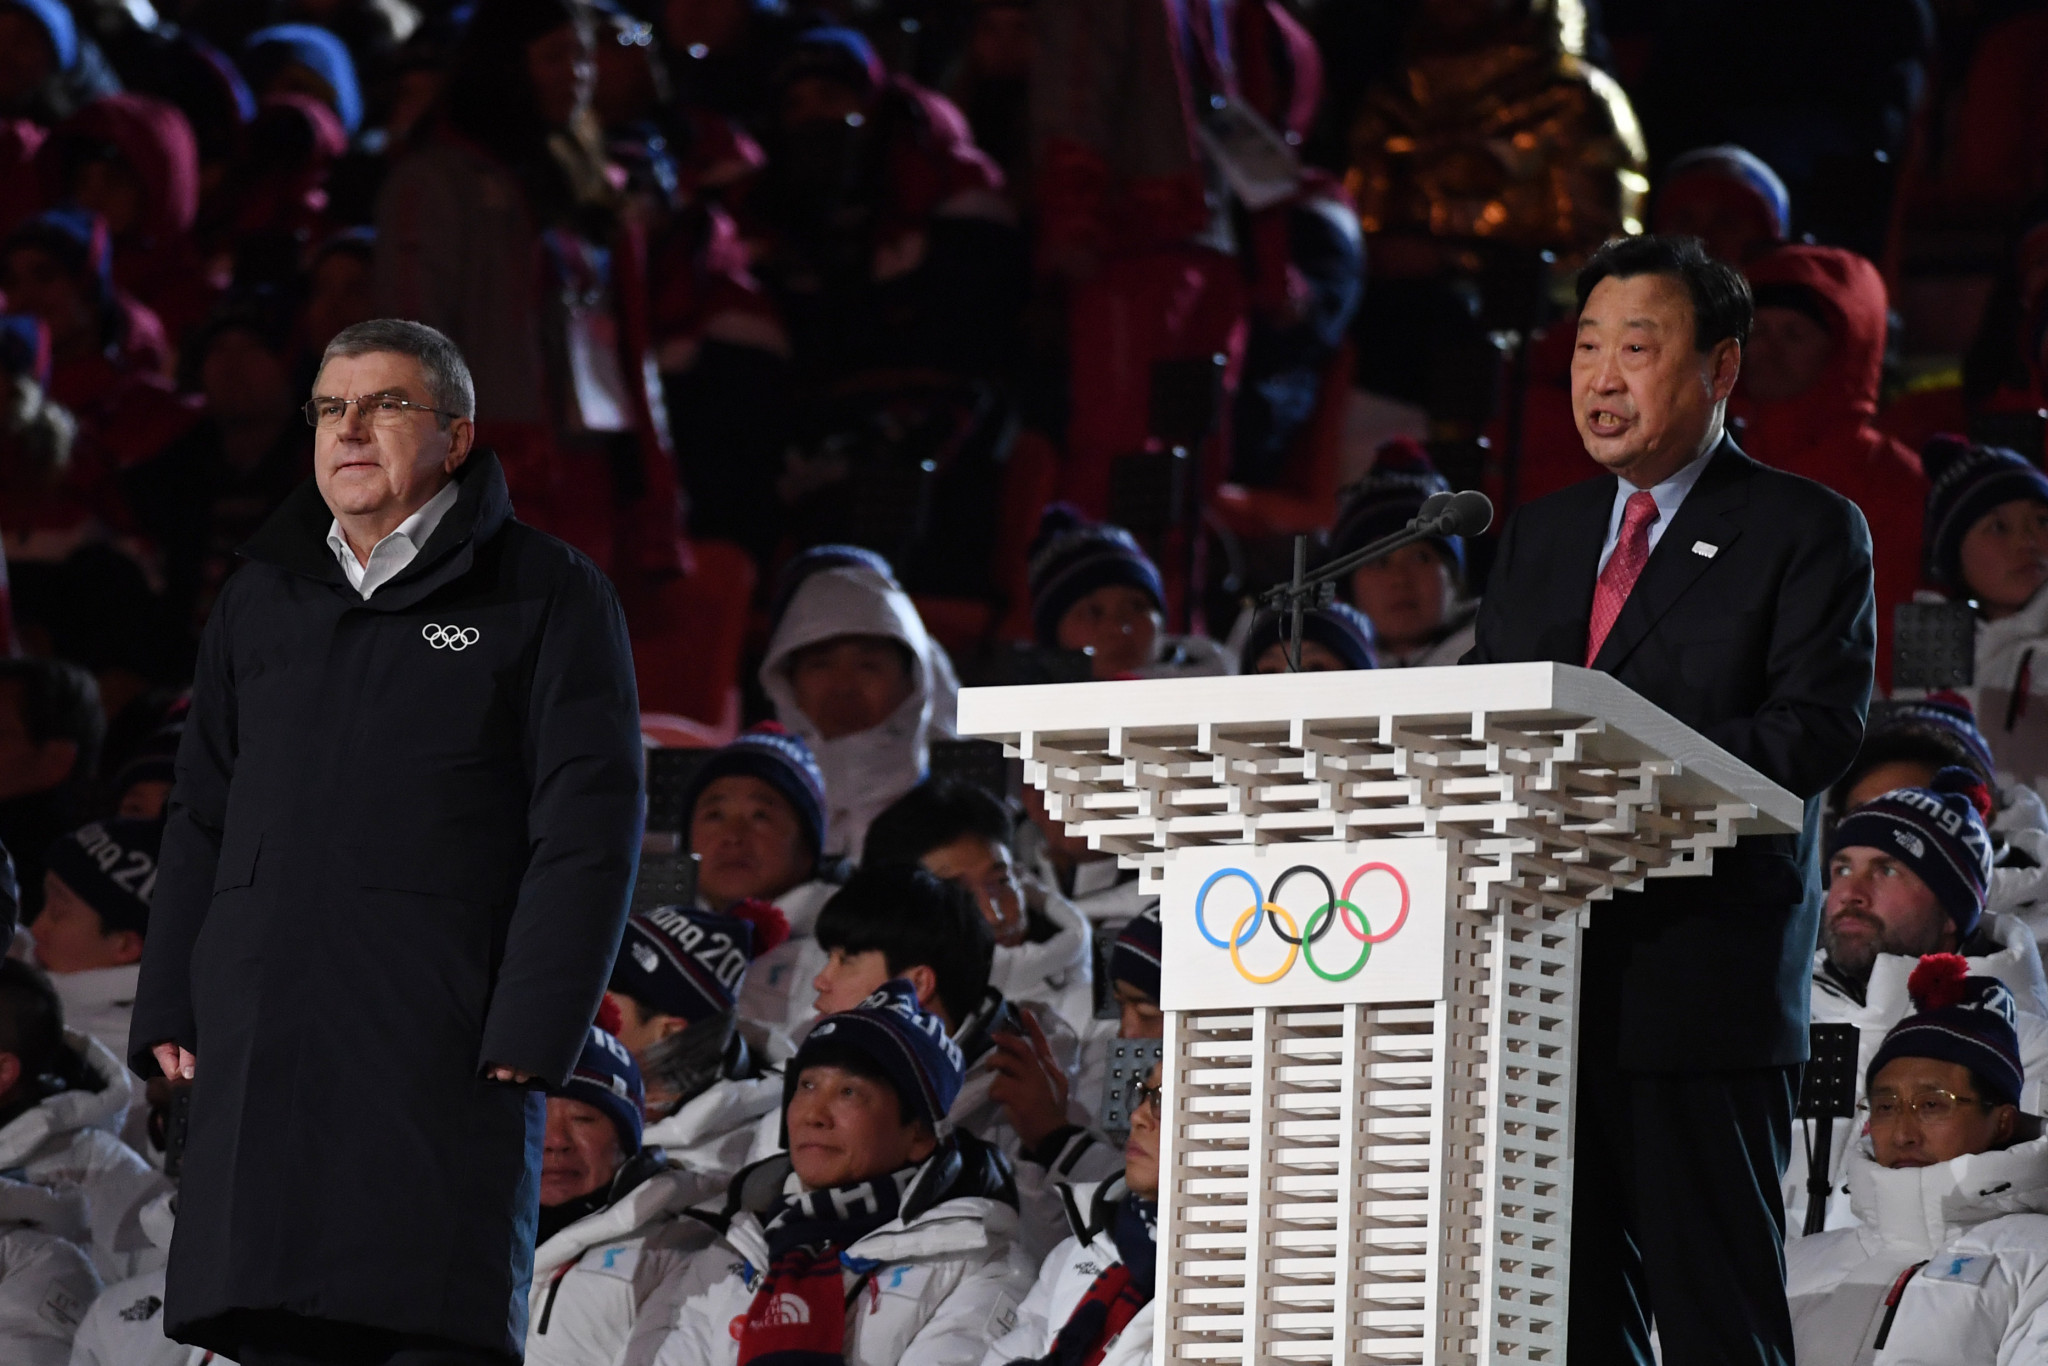 IOC President Thomas Bach, left, spoke alongside Pyeongchang 2018 counterpart Lee Hee-beom ©Getty Images